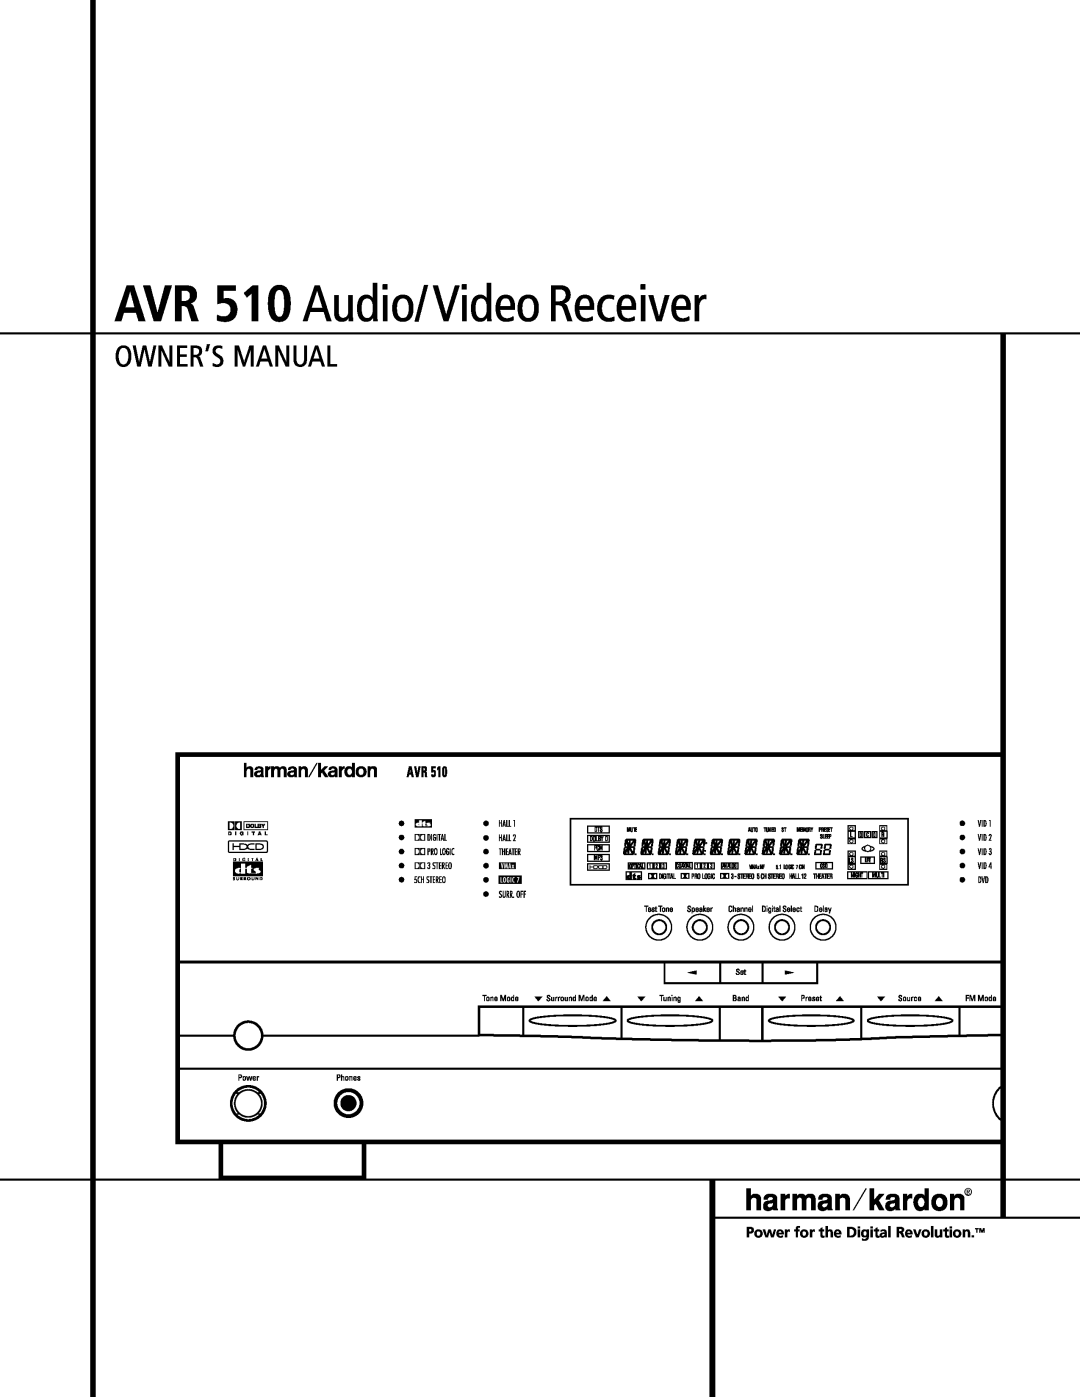 Harman-Kardon owner manual AVR 510 Audio/ Video Receiver, Power for the Digital Revolution, Dolby D, Pro Logic 